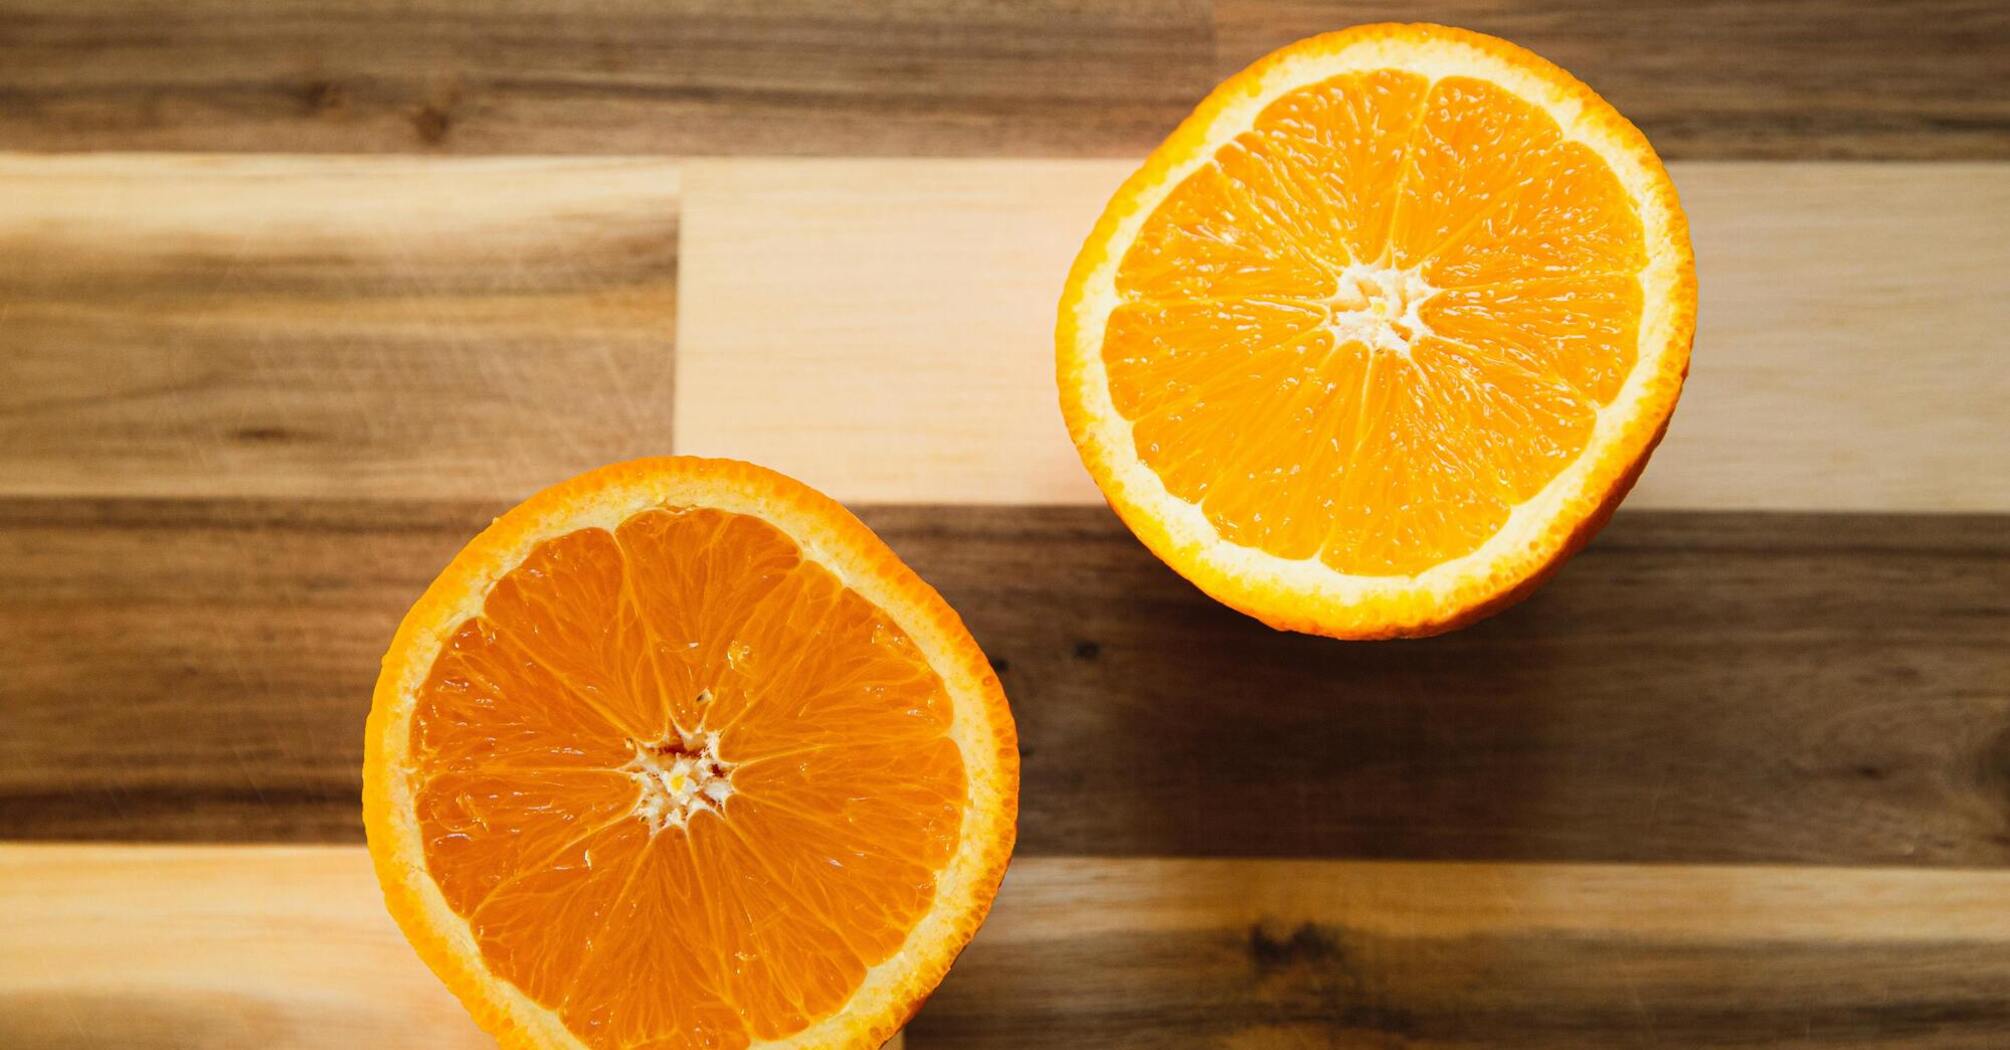 How to use orange peels in everyday life